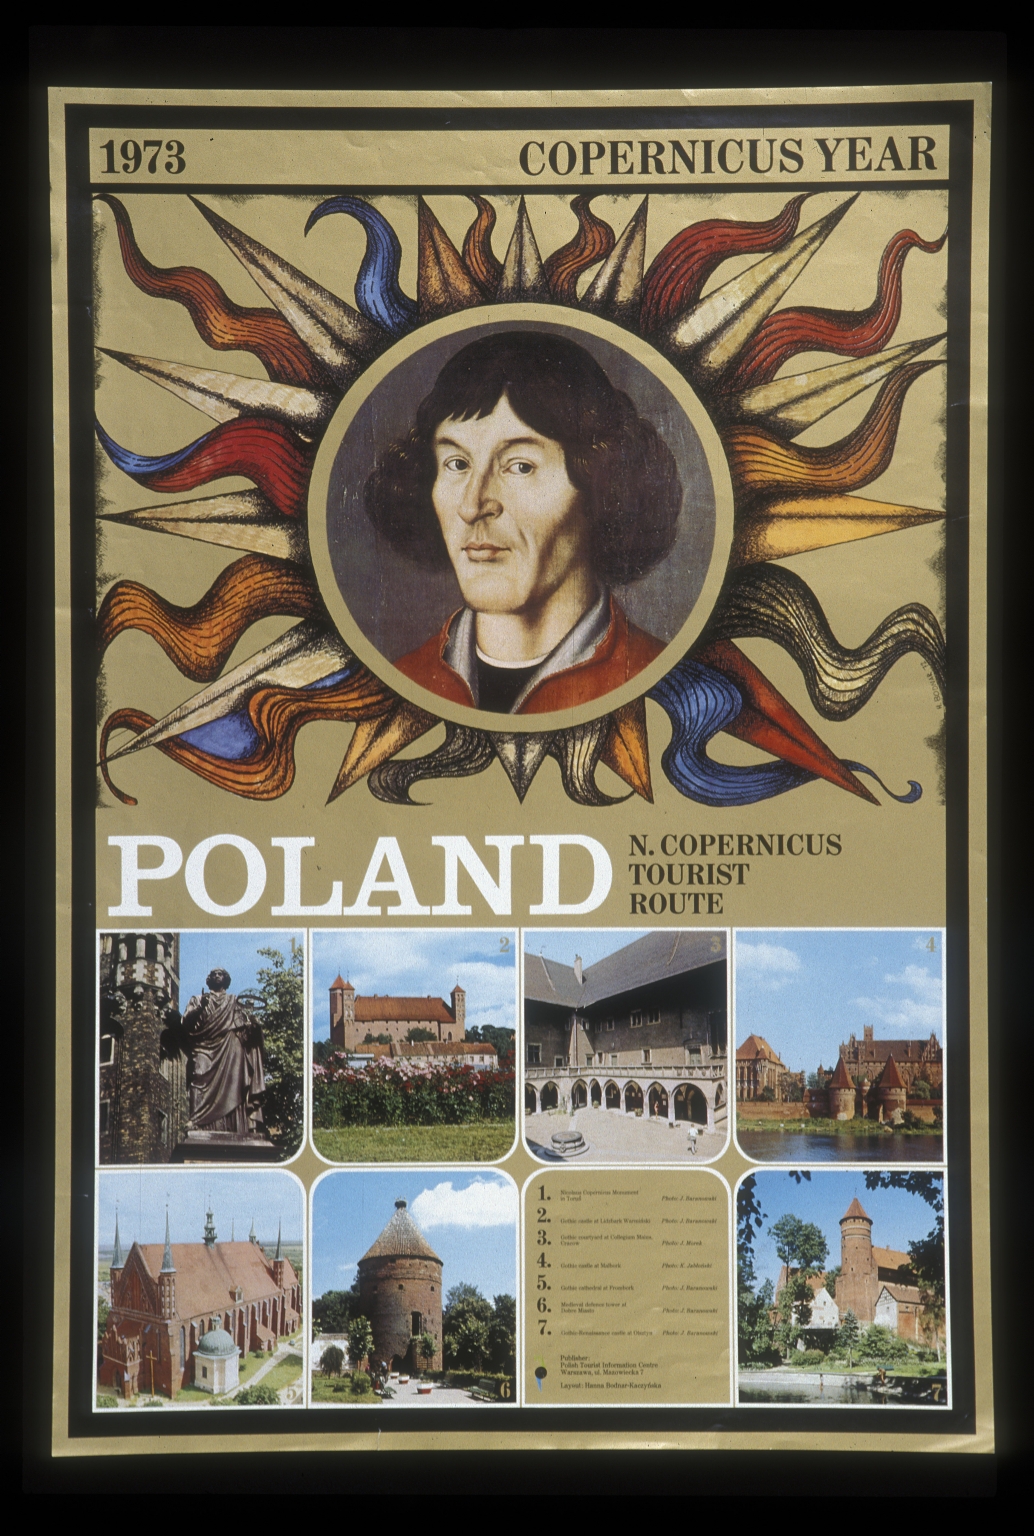 1973 Copernicus year: Poland, N Copernicus' tourist route